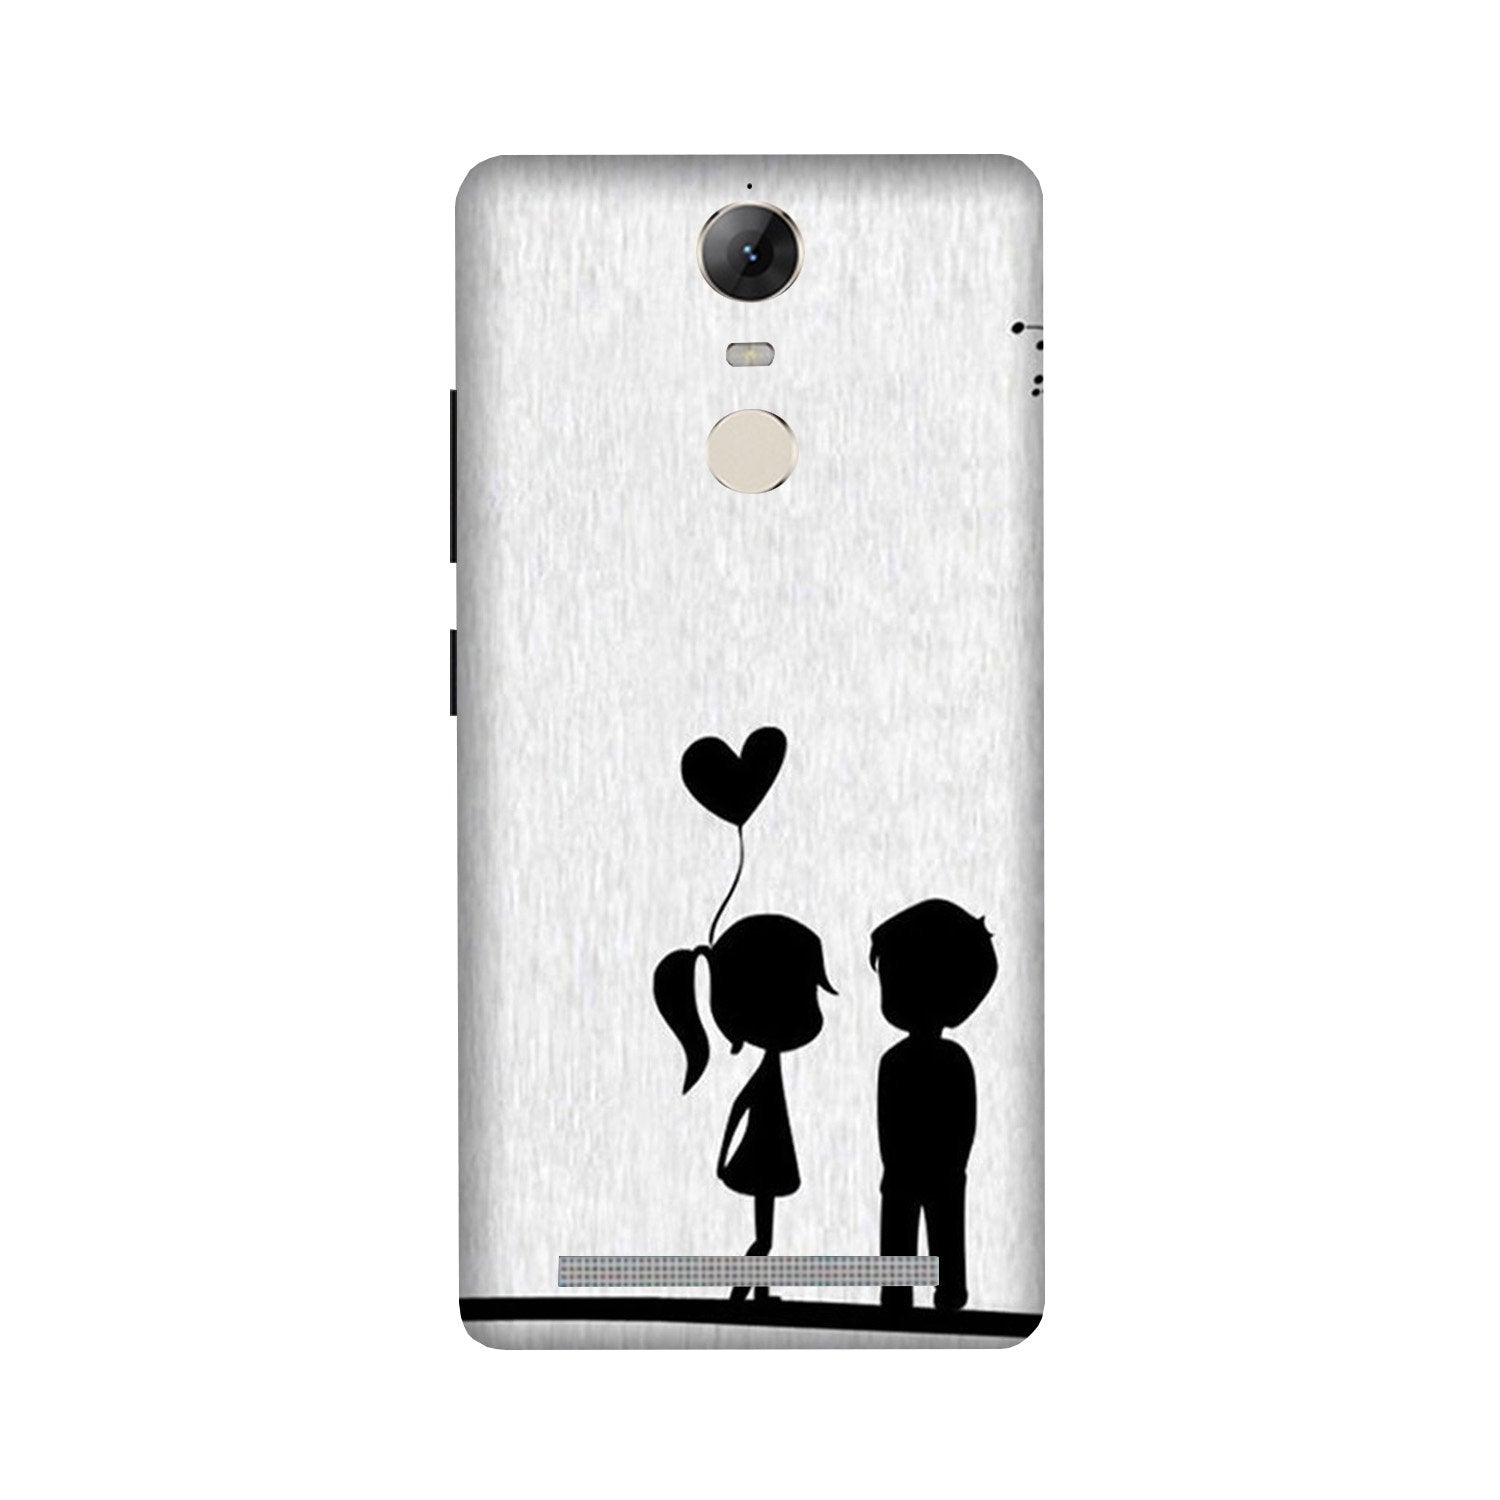 Cute Kid Couple Case for Lenovo Vibe K5 Note (Design No. 283)